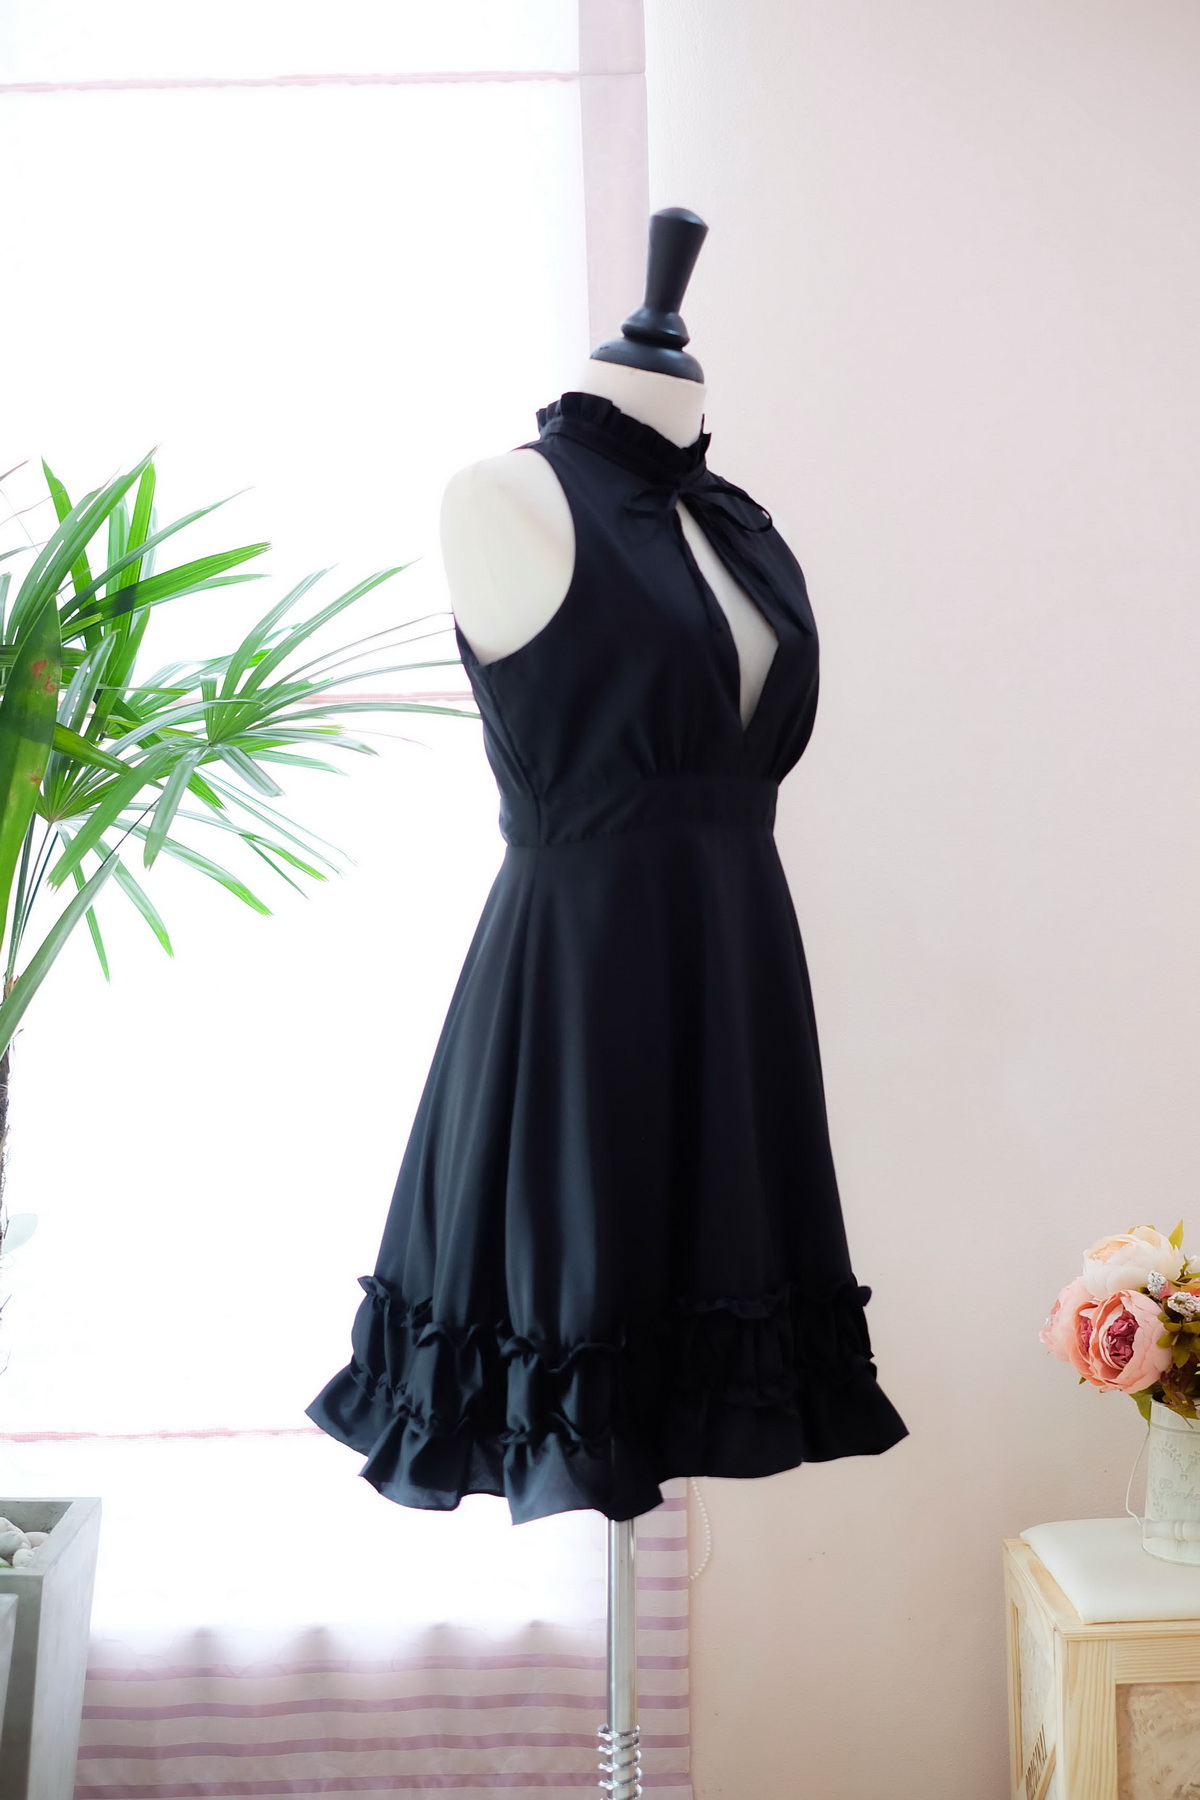 Black Chiffon Ruffled High Halter Neck Short A-line Bridesmaid Dress Featuring Cutout Detailing.